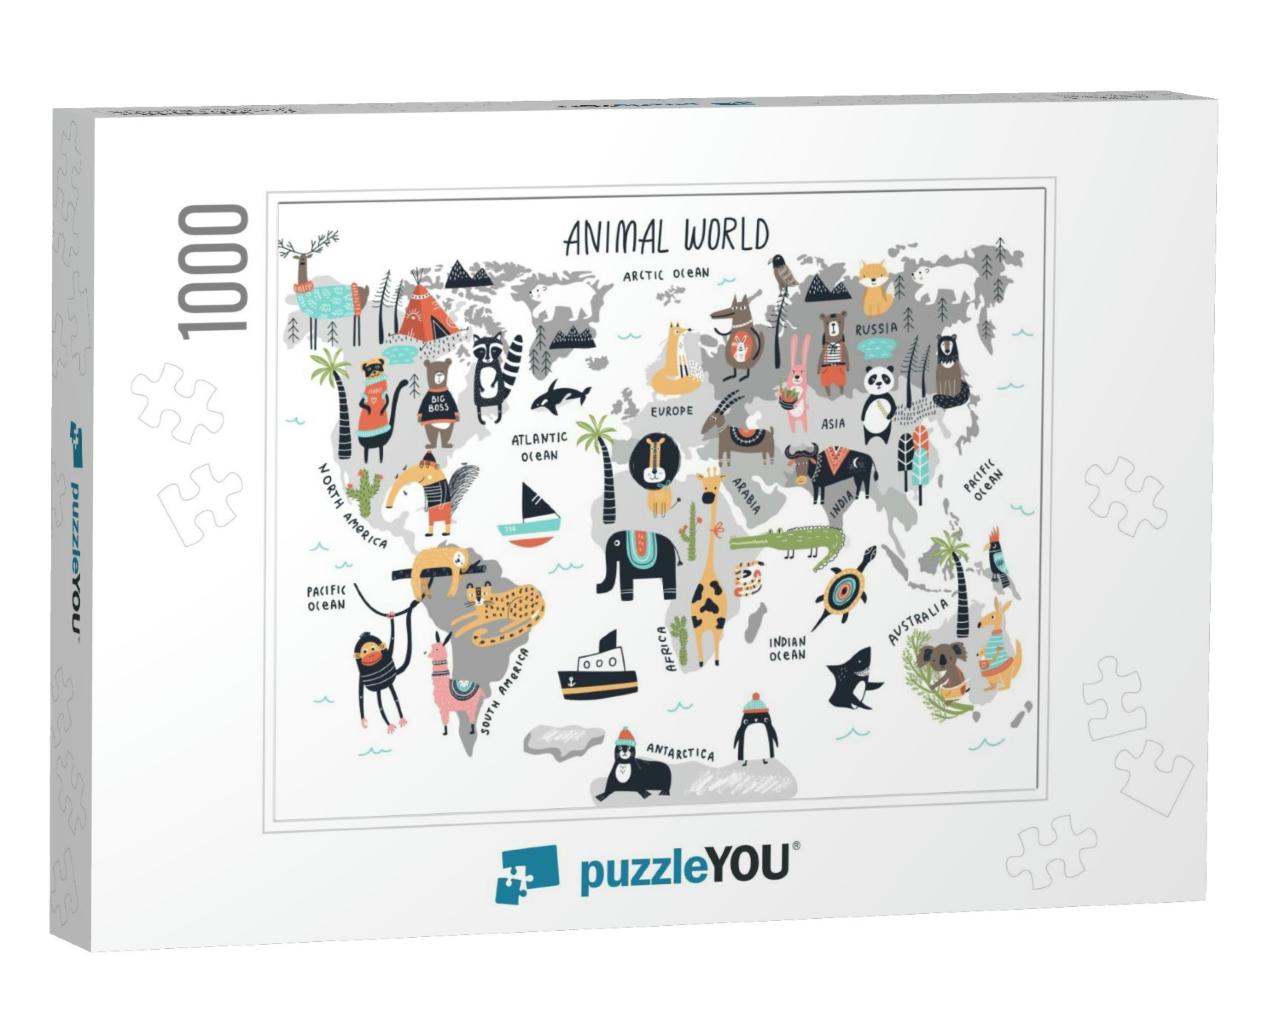 Animal World Map - Cute Cartoon Hand Drawn Nursery Print... Jigsaw Puzzle with 1000 pieces